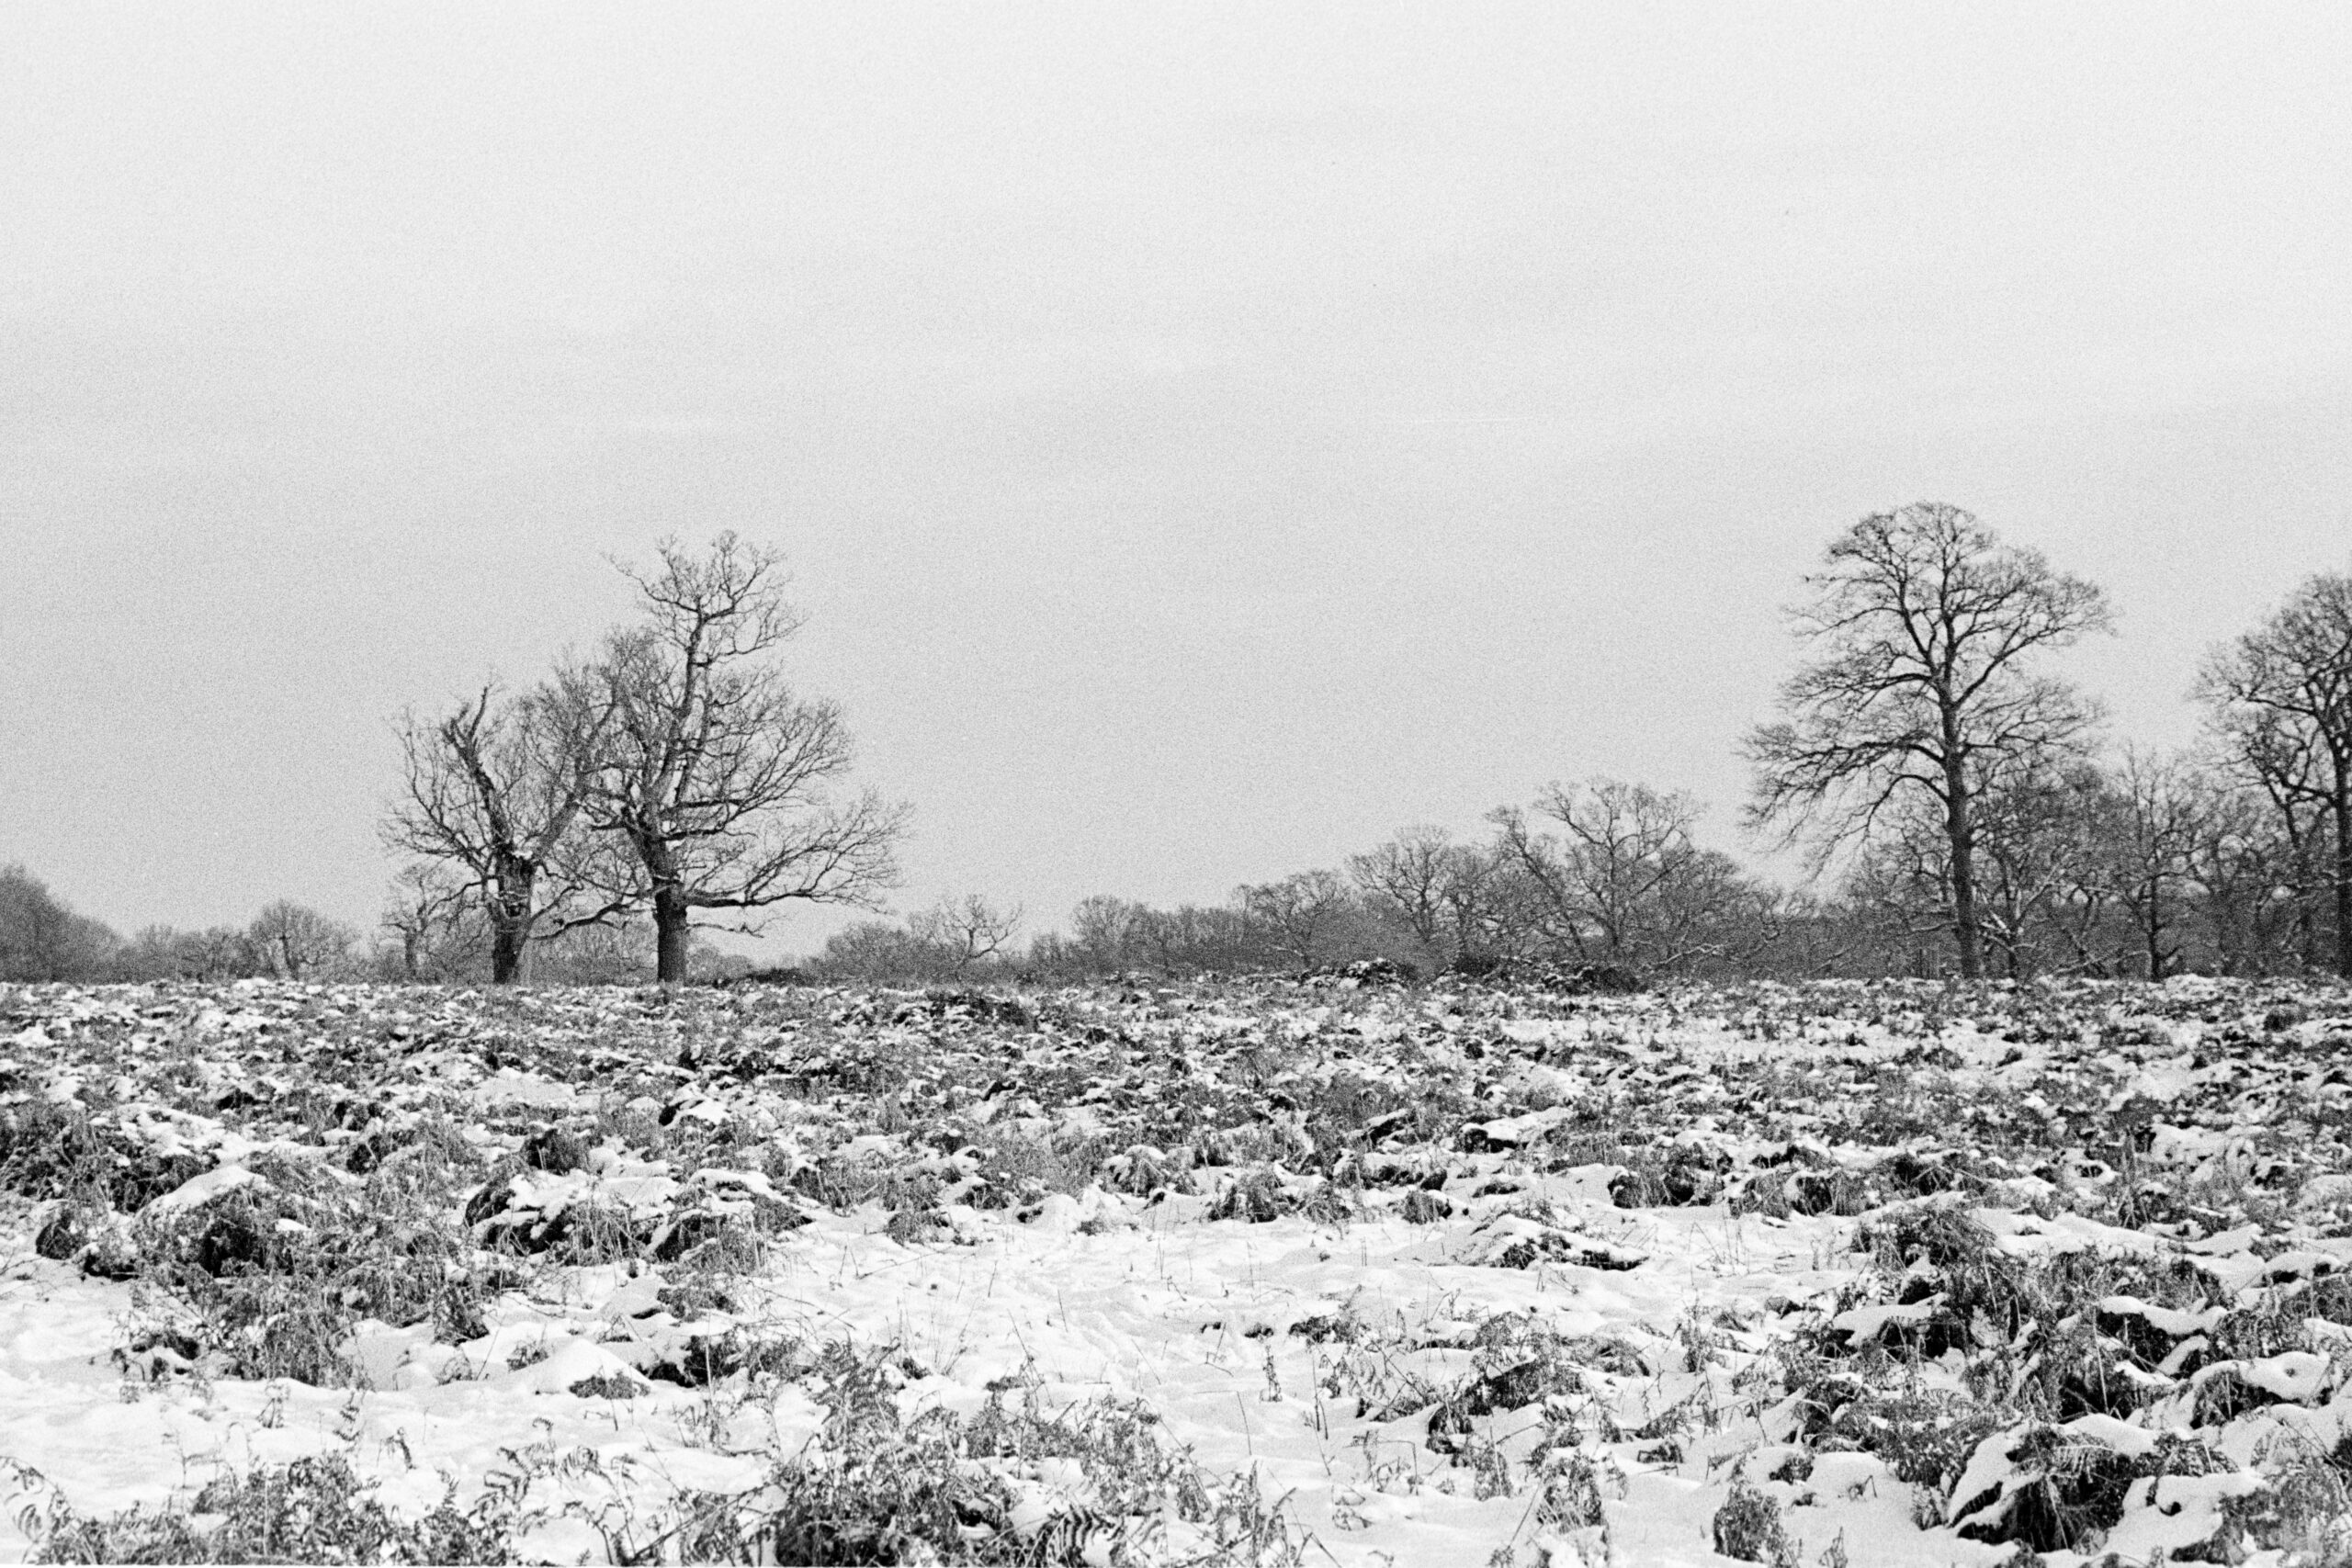 Image of a barren winter landscape.